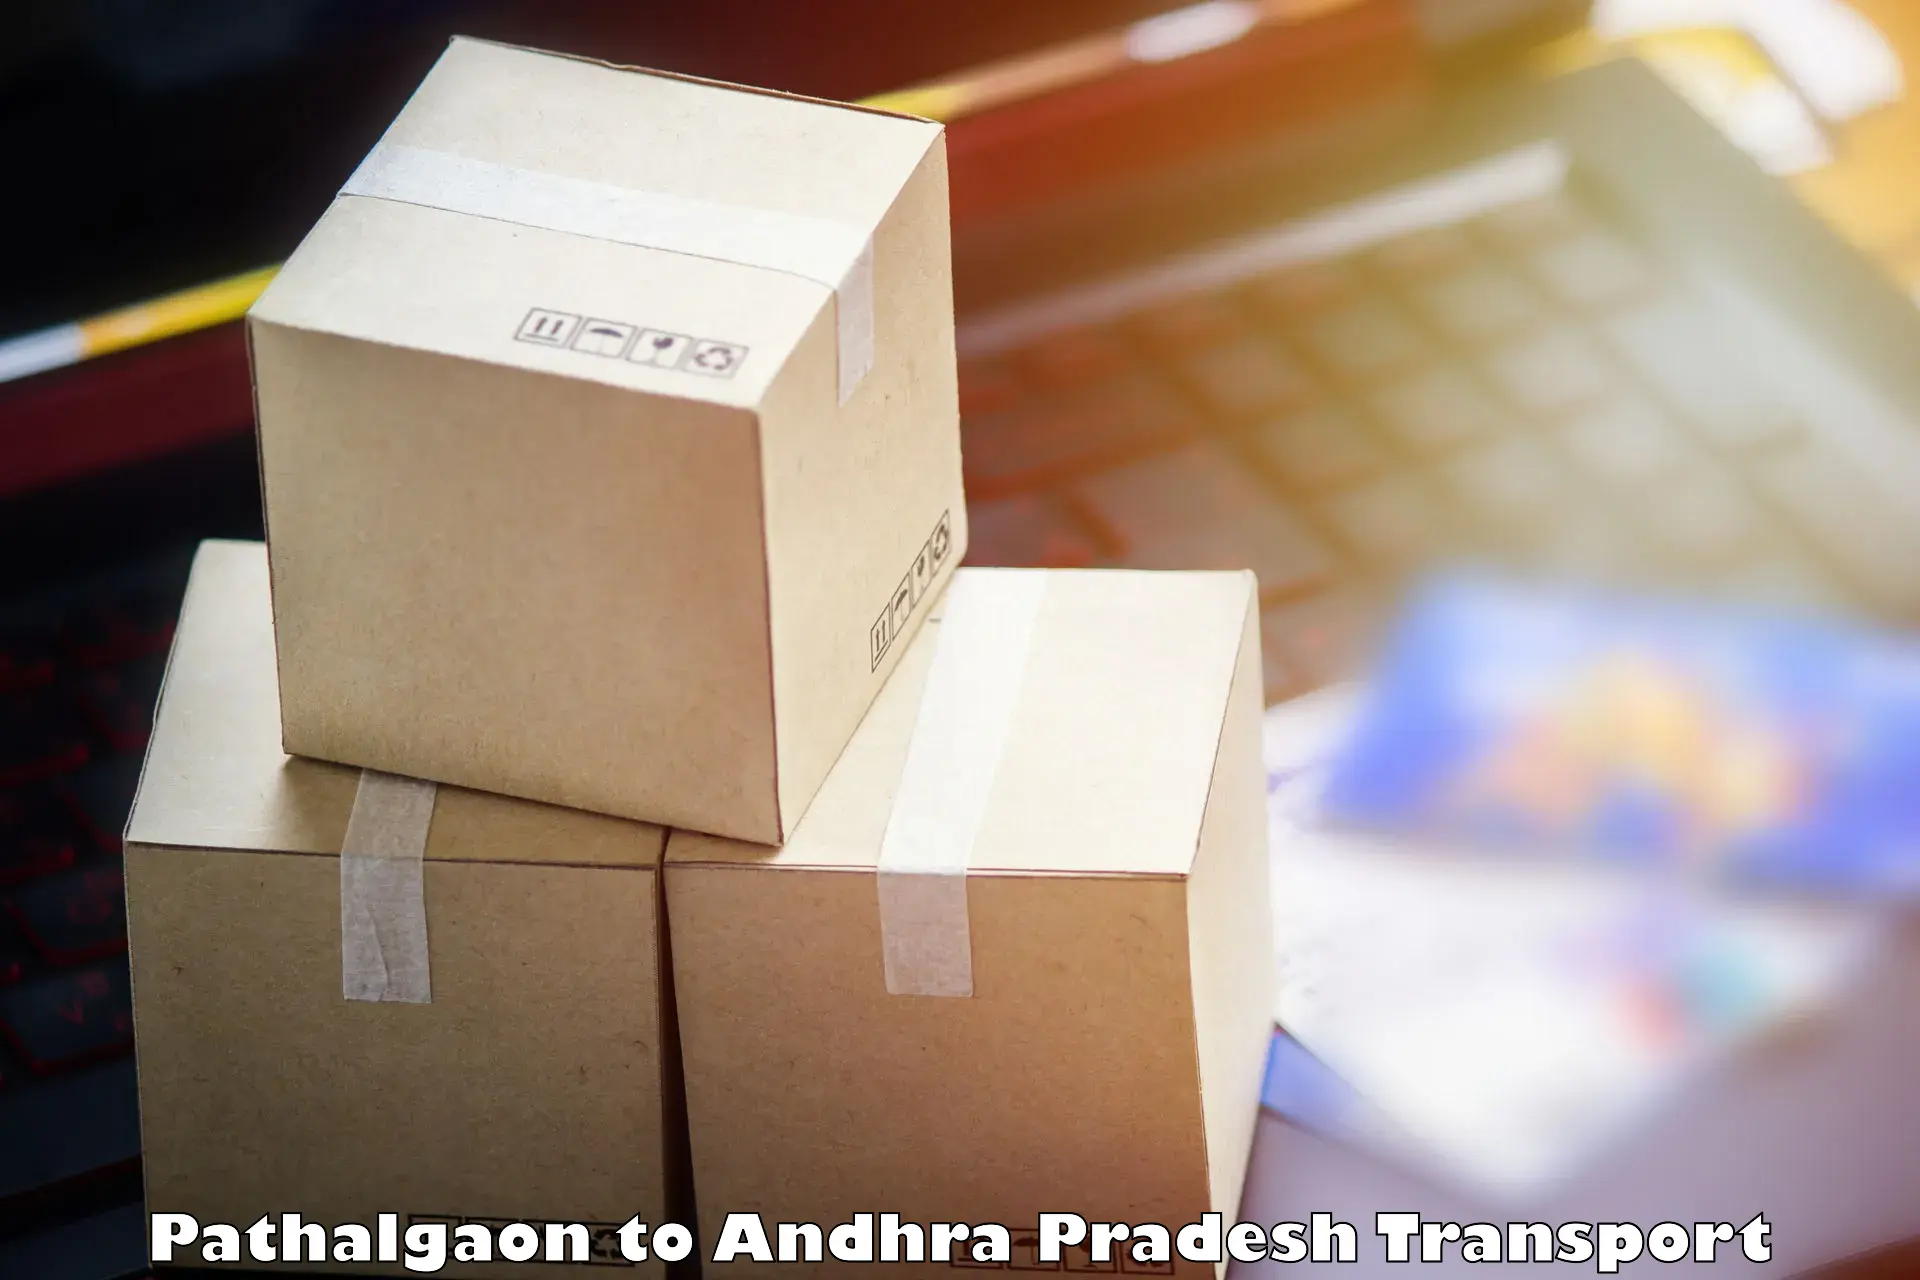 Truck transport companies in India Pathalgaon to Garividi